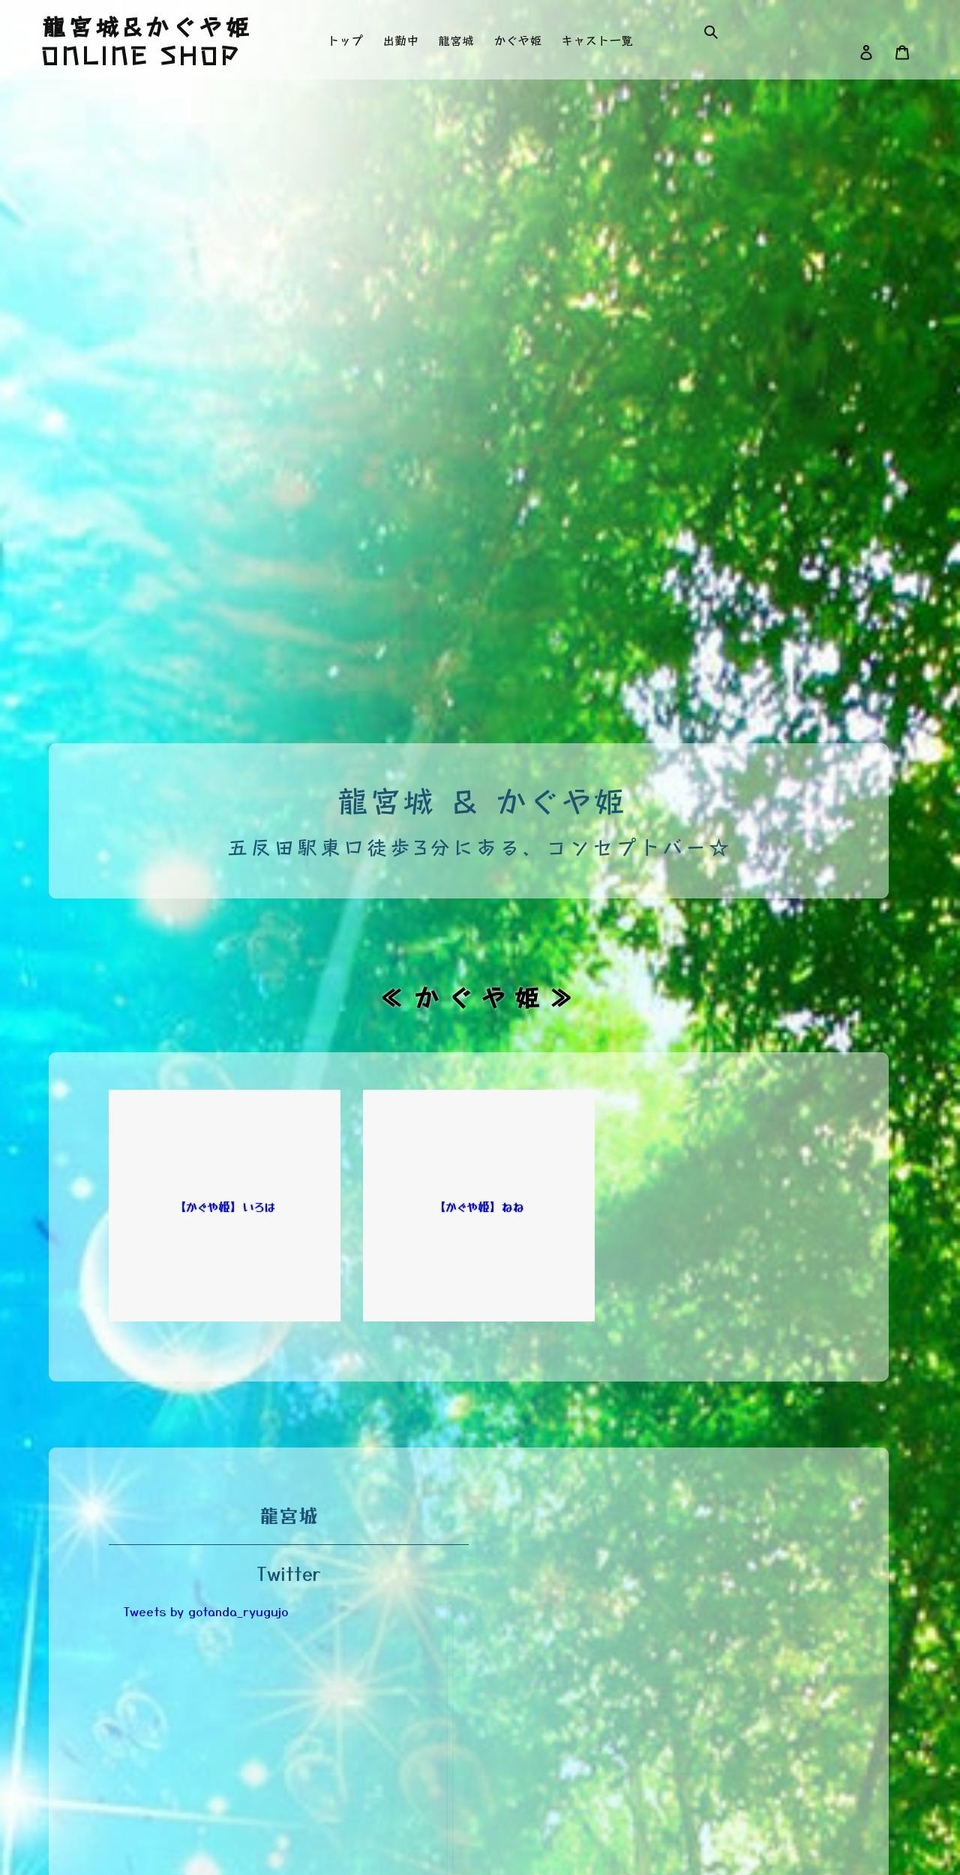 ryugujo.online shopify website screenshot